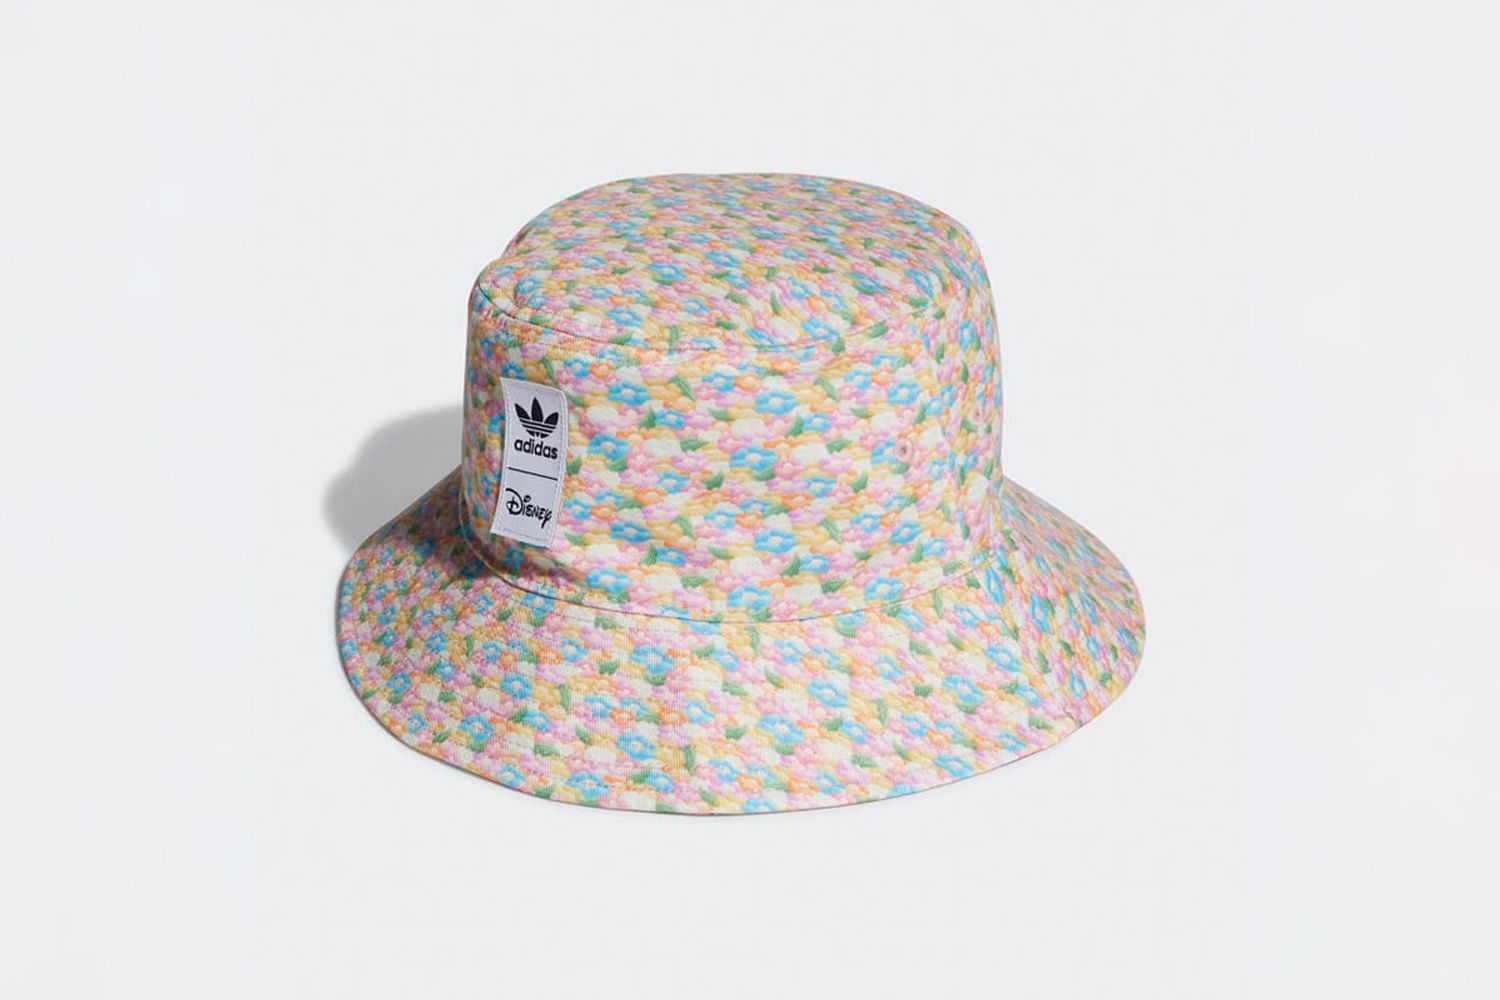 Disney Bucket Hat